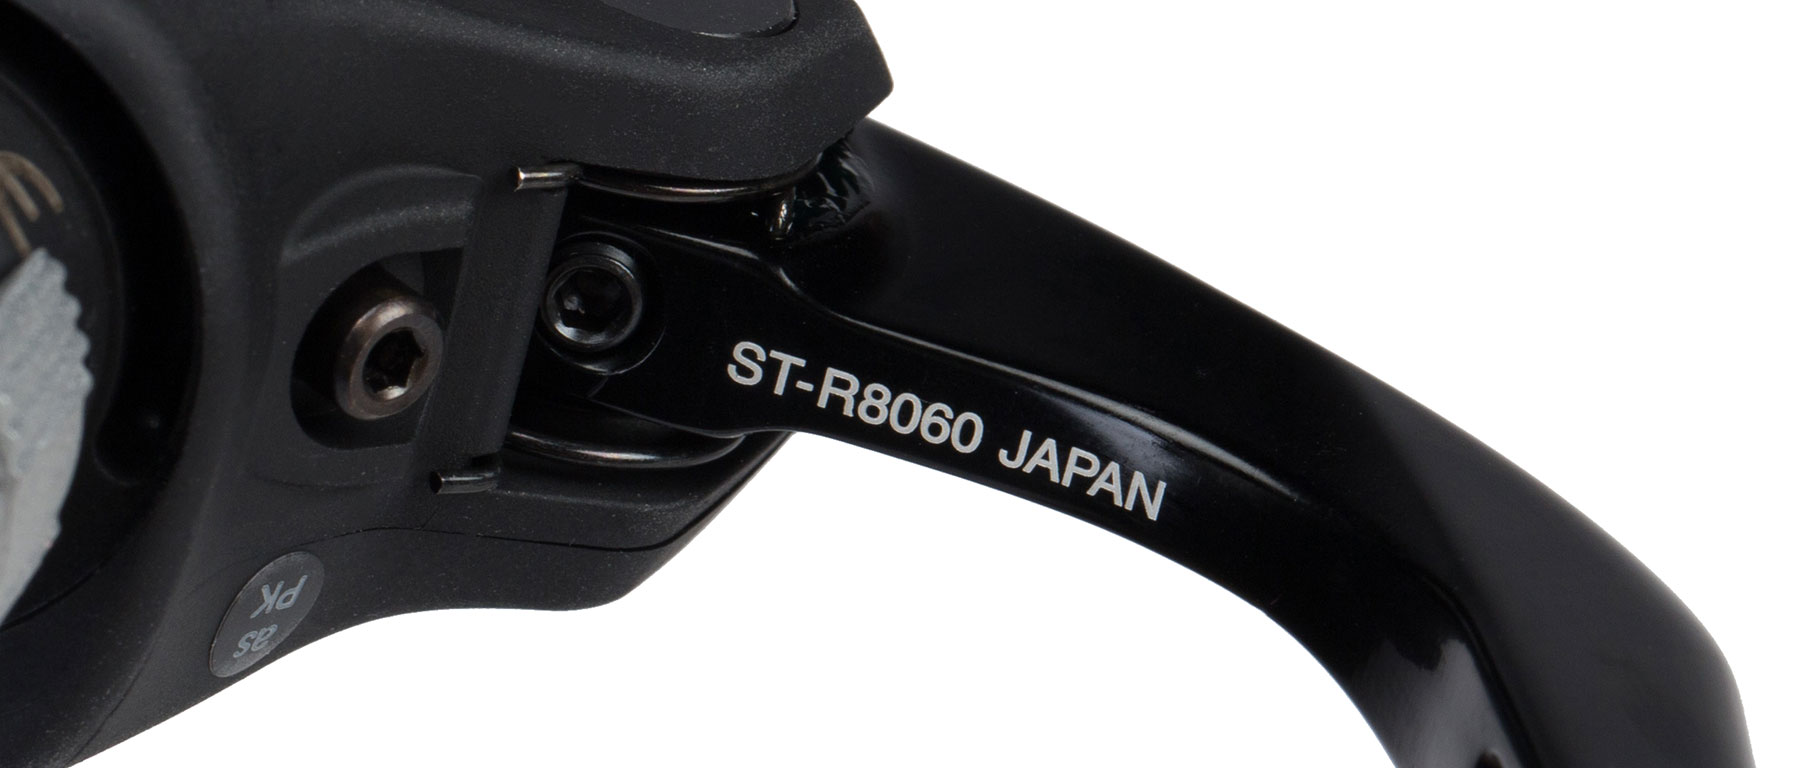 Shimano Ultegra Di2 ST-R8060 TT Shift-Brake Levers